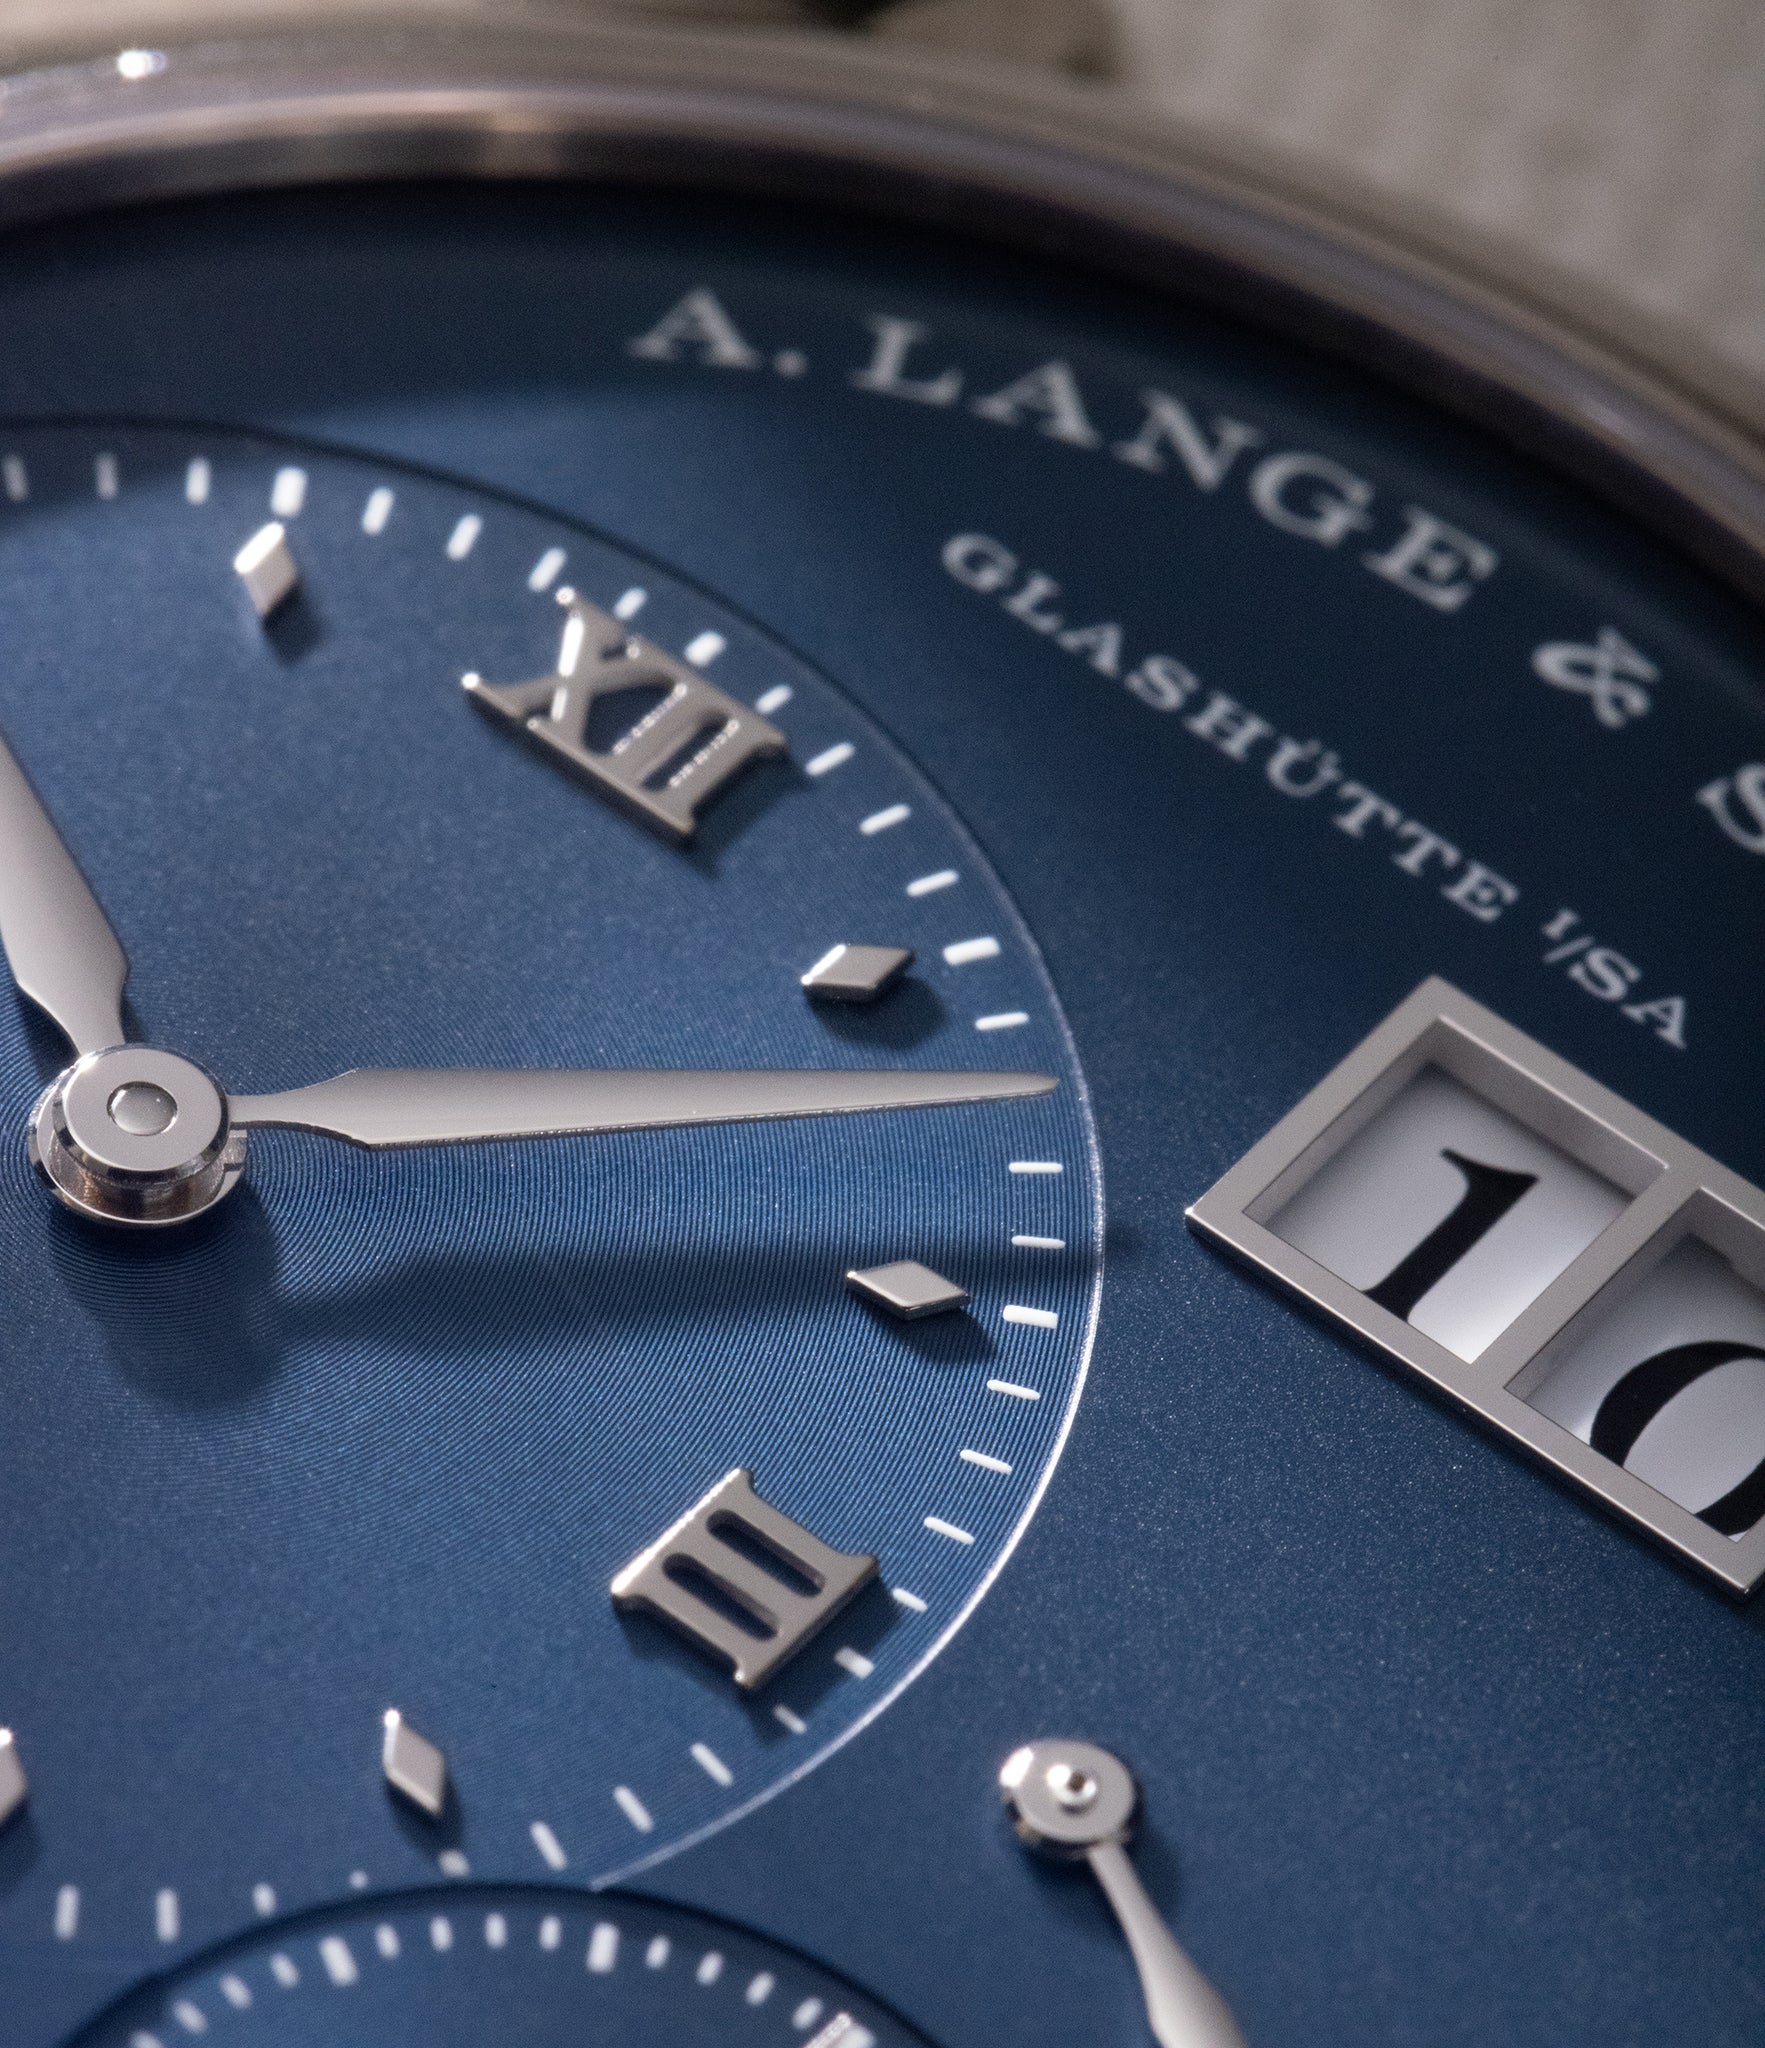 Lange 1 “Blue Series” | 191.028 | White Gold